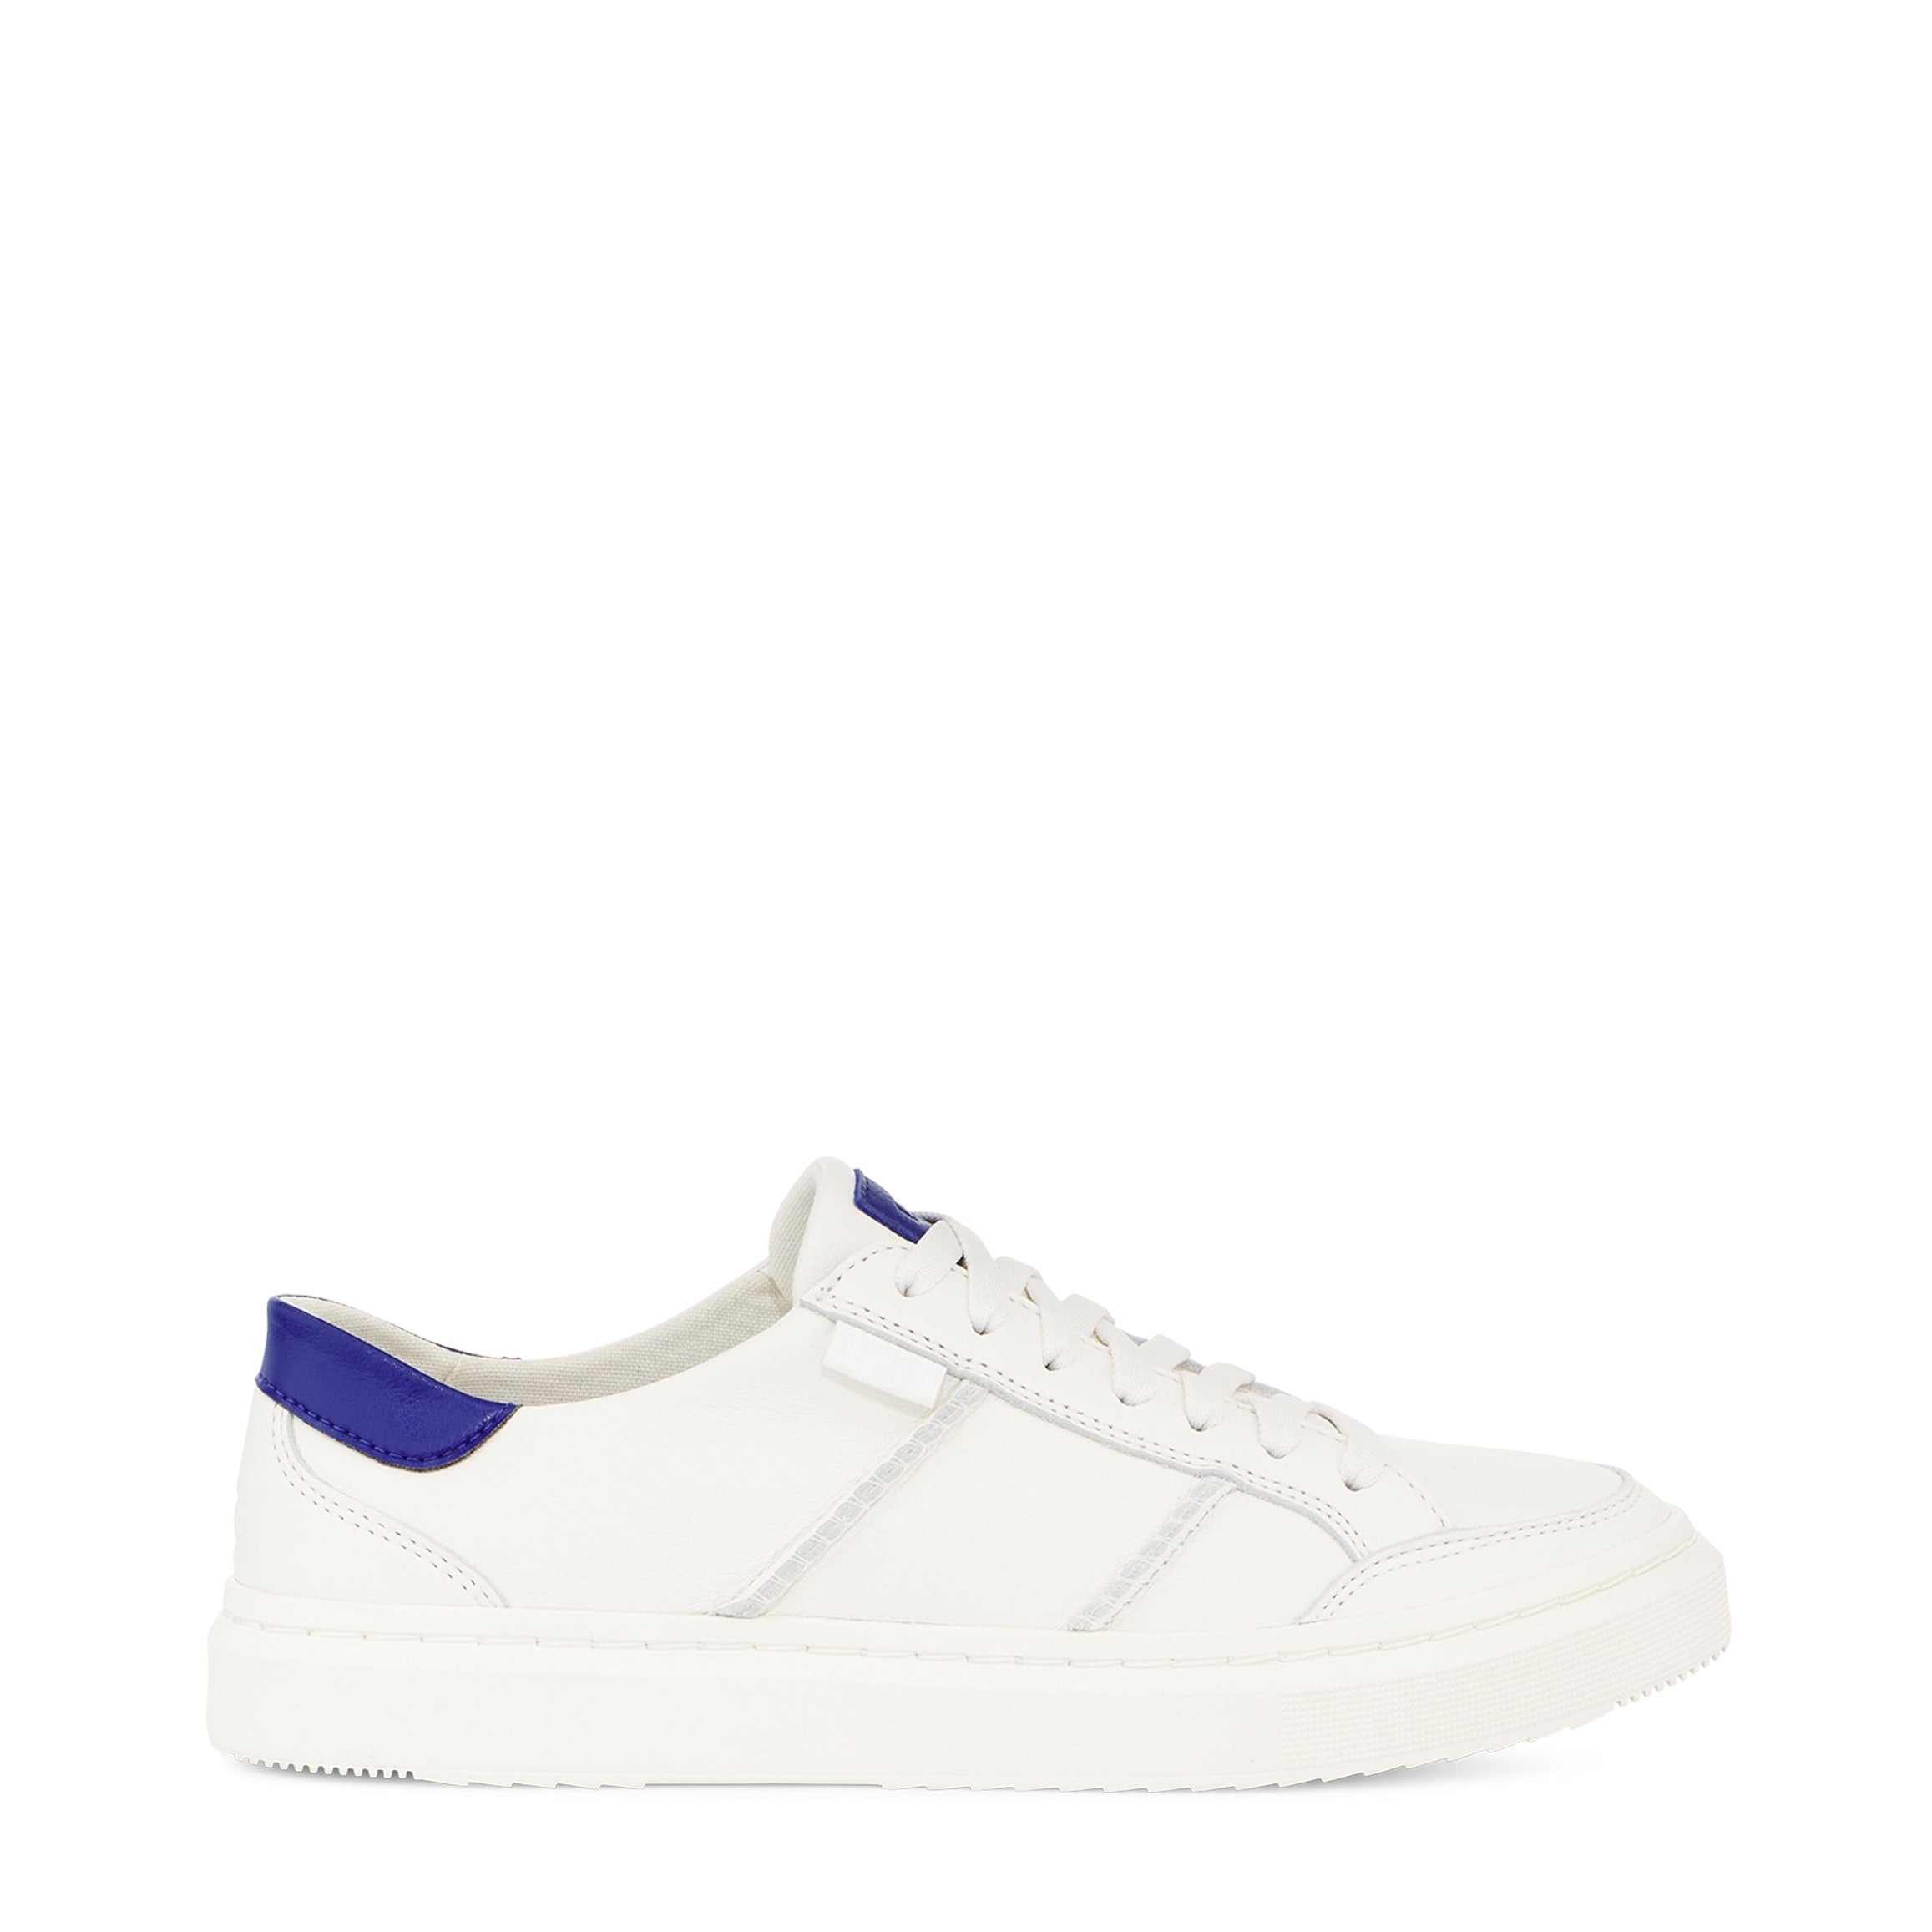 Sample UGG Alameda Lace Sneaker Bright White/Naval Blue  